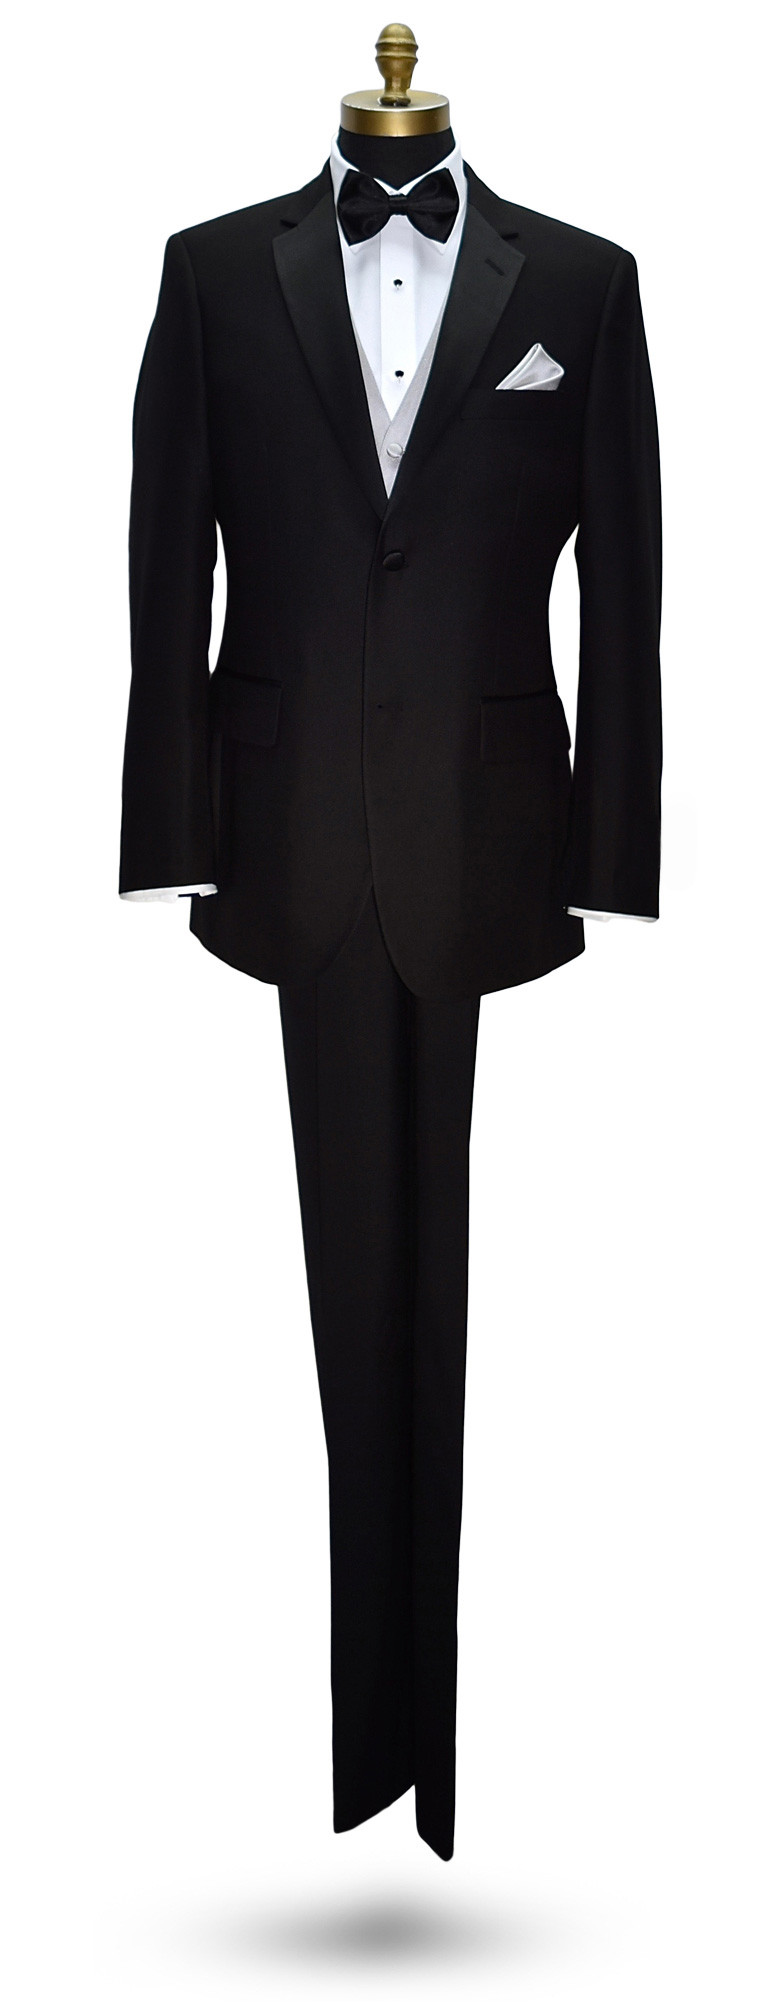 San Miguel black notch lapel tuxedo with light gray vest and black bowtie